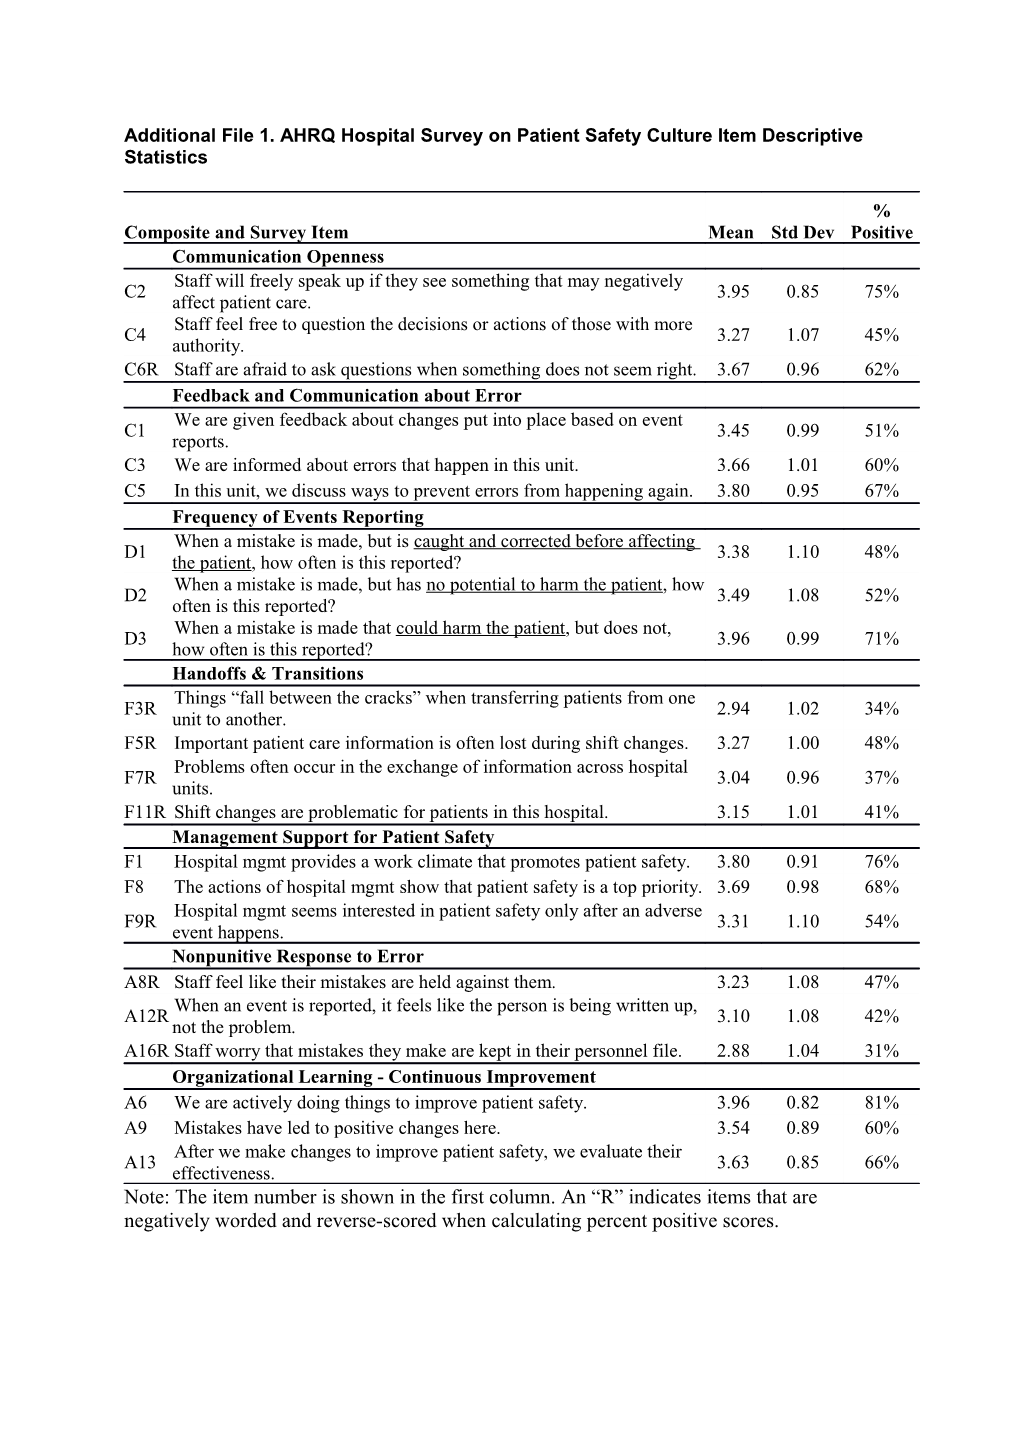 Additional File 1.AHRQ Hospital Survey on Patient Safety Culture Item Descriptive Statistics